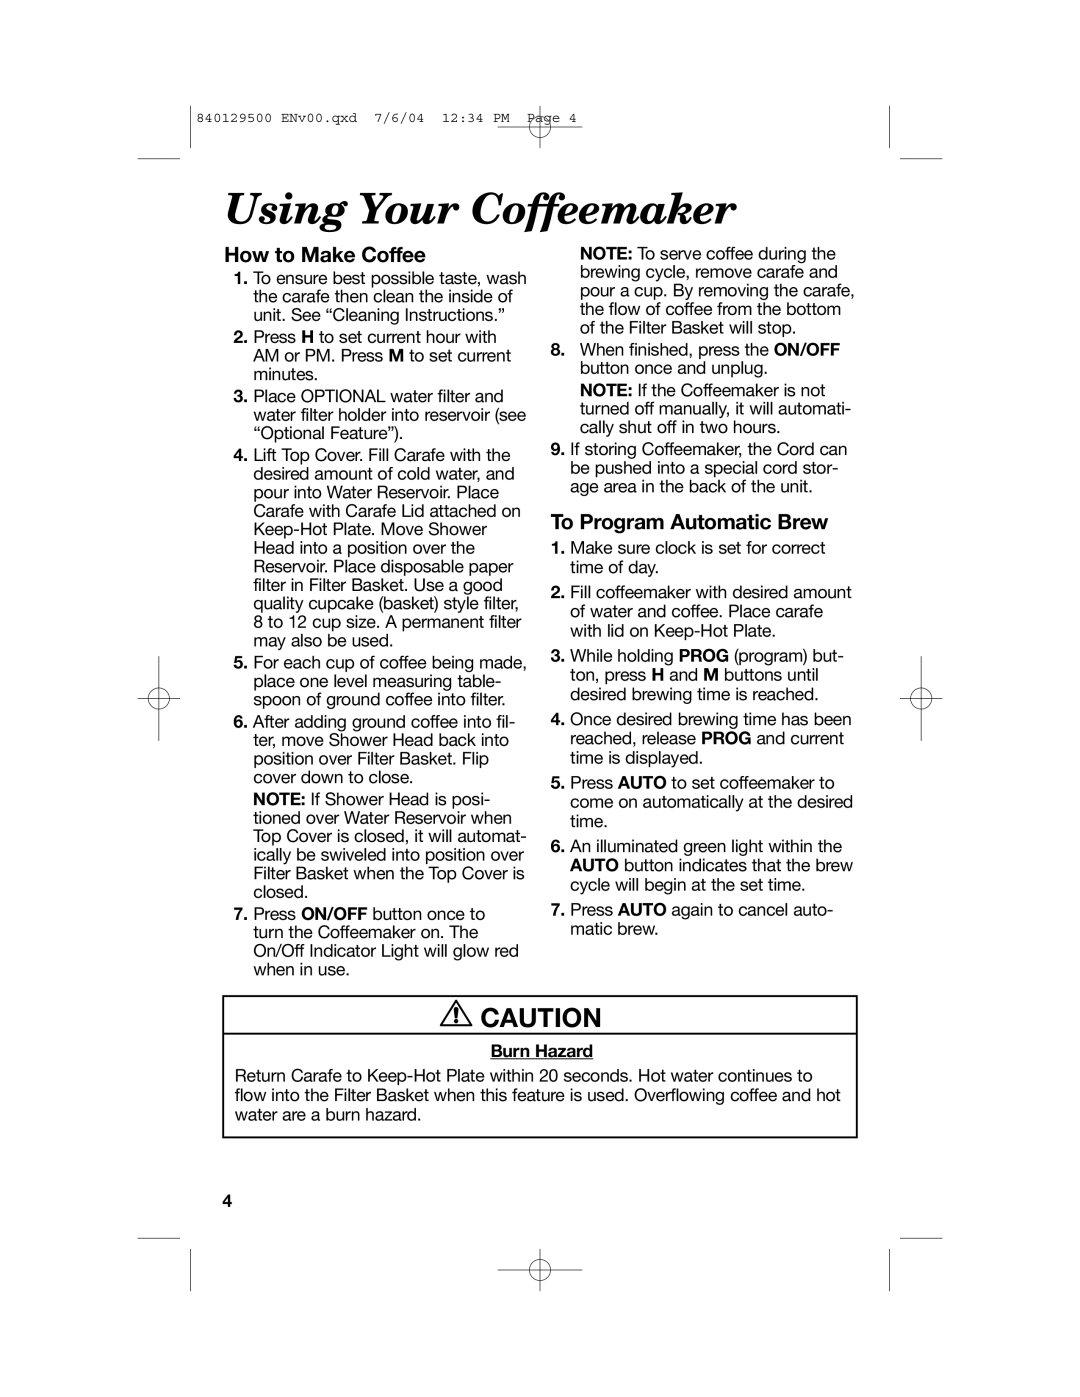 Hamilton Beach 43251, 43224C, 43254 manual Using Your Coffeemaker, How to Make Coffee, To Program Automatic Brew, Burn Hazard 